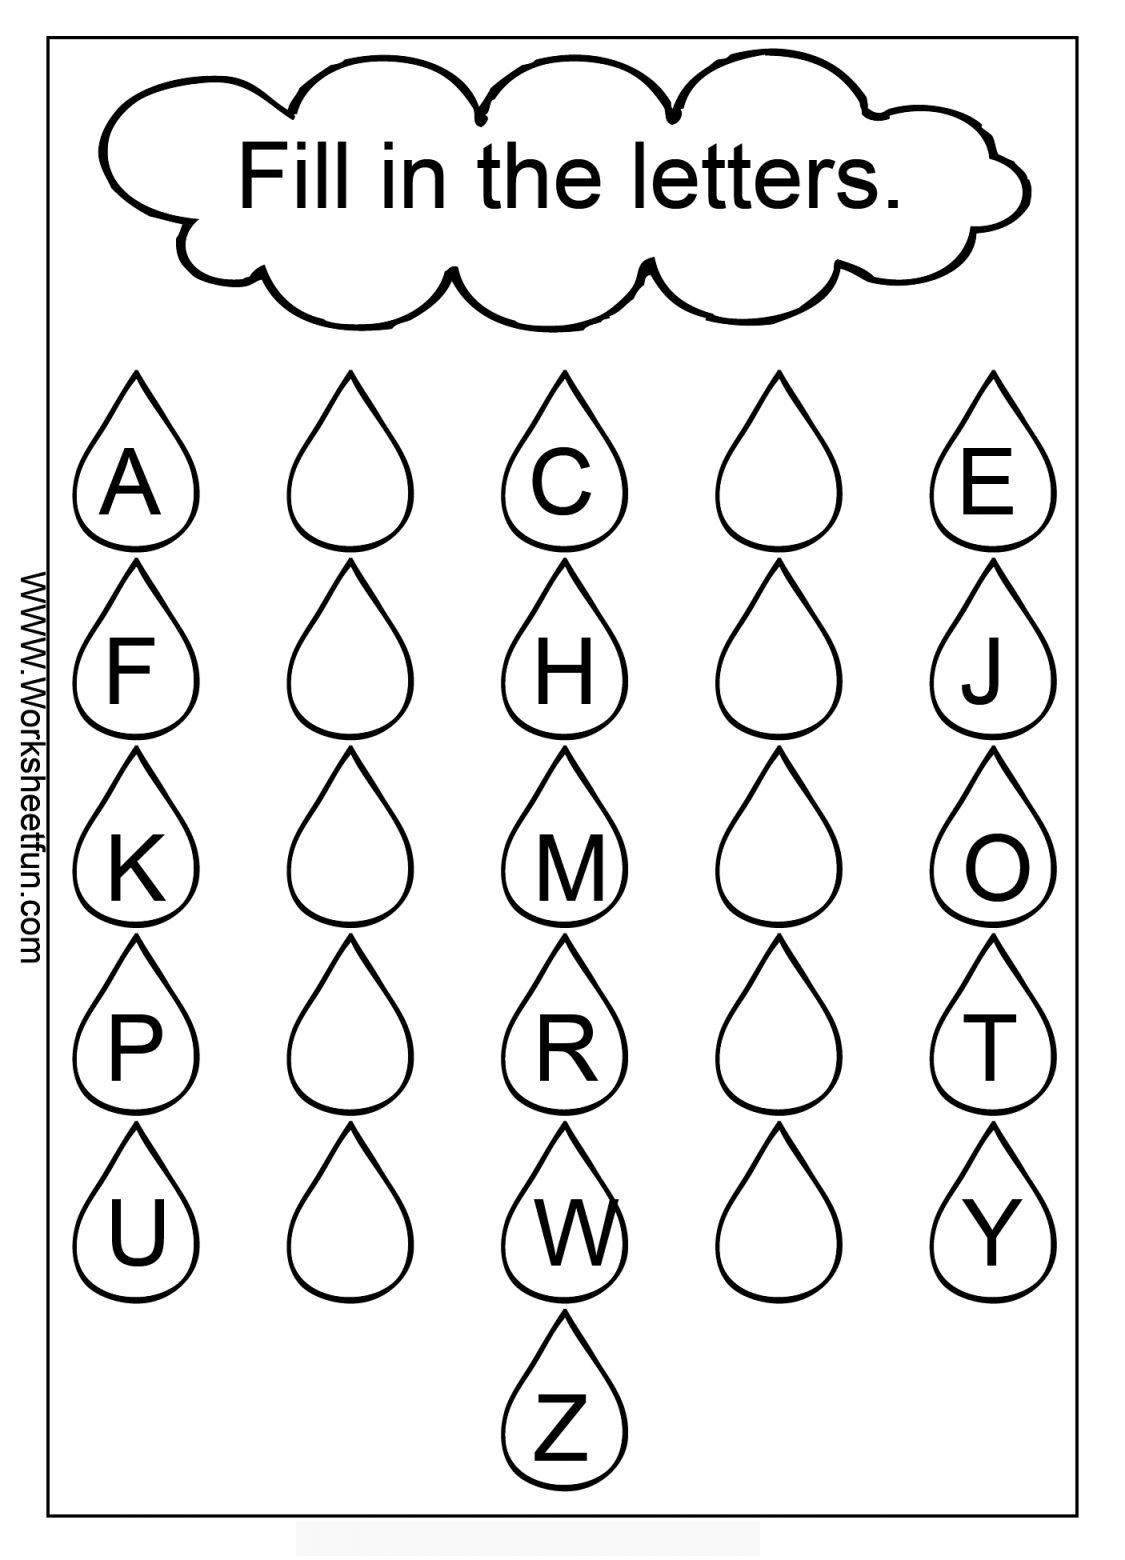 Alphabet Worksheets Pdf | Iancconf | Free Kindergarten inside The Alphabet Worksheets Pdf